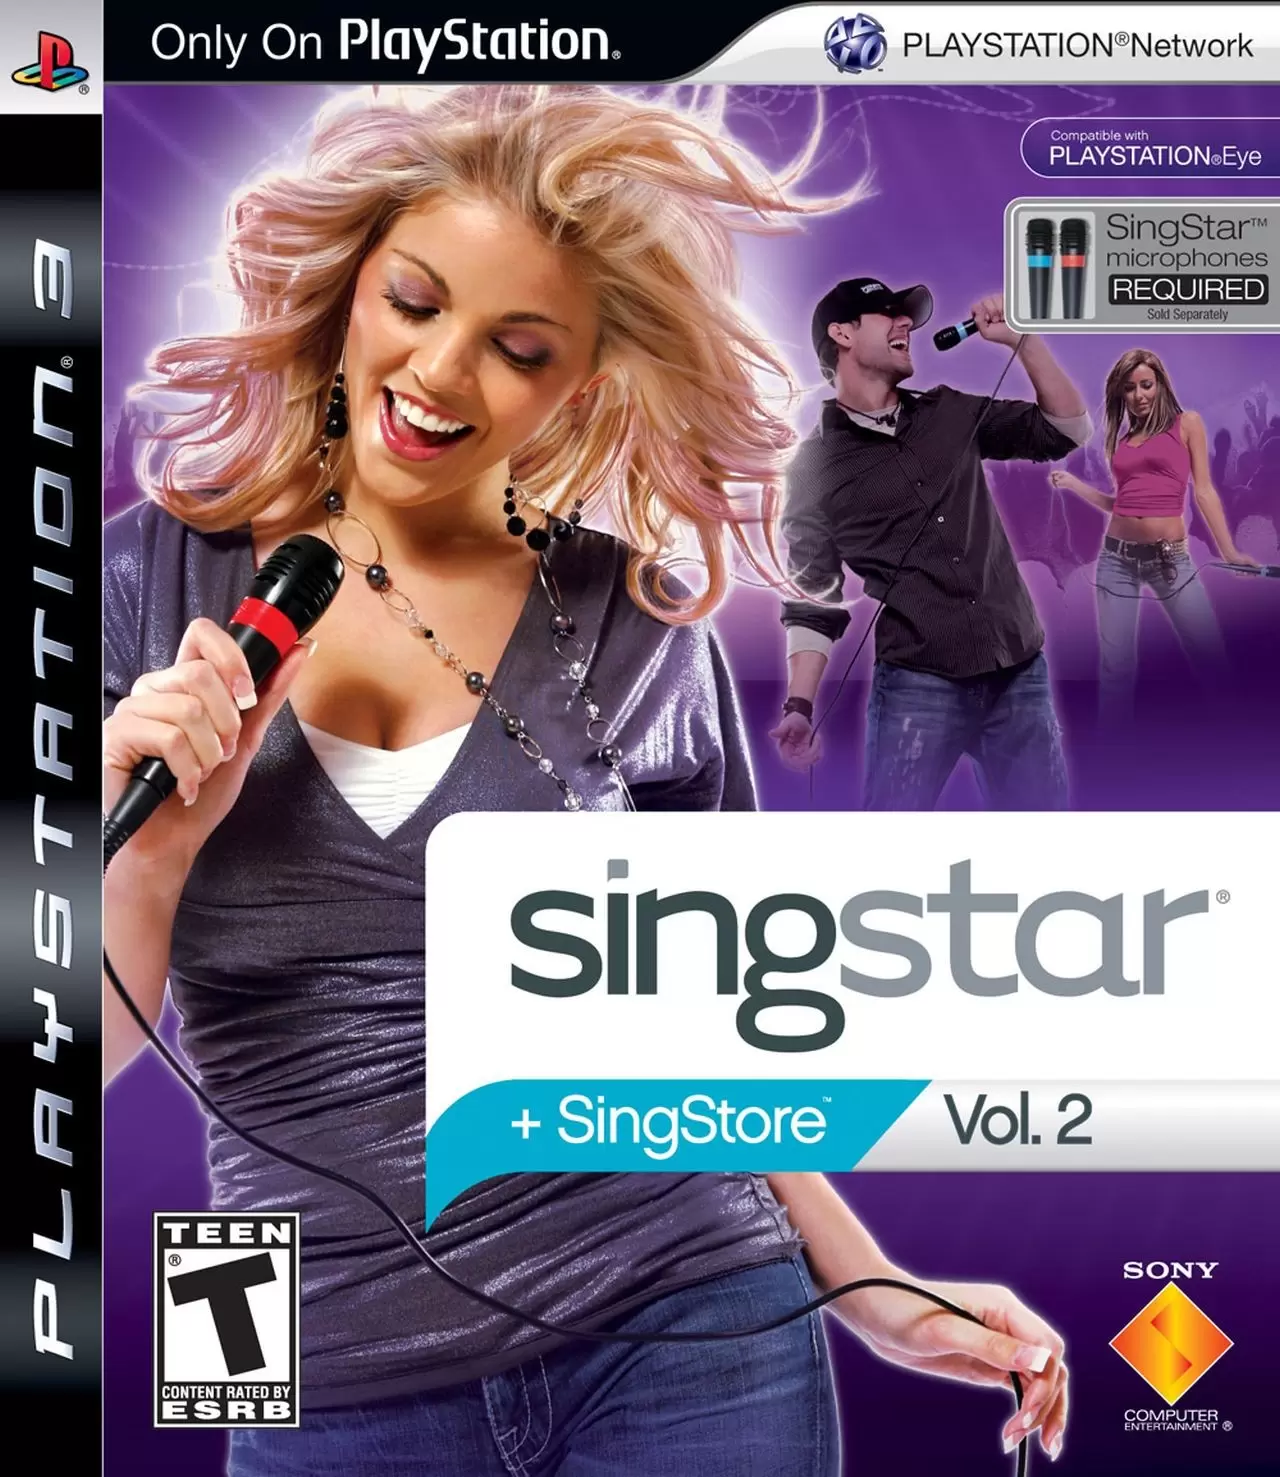 PS3 Games - SingStar Vol. 2